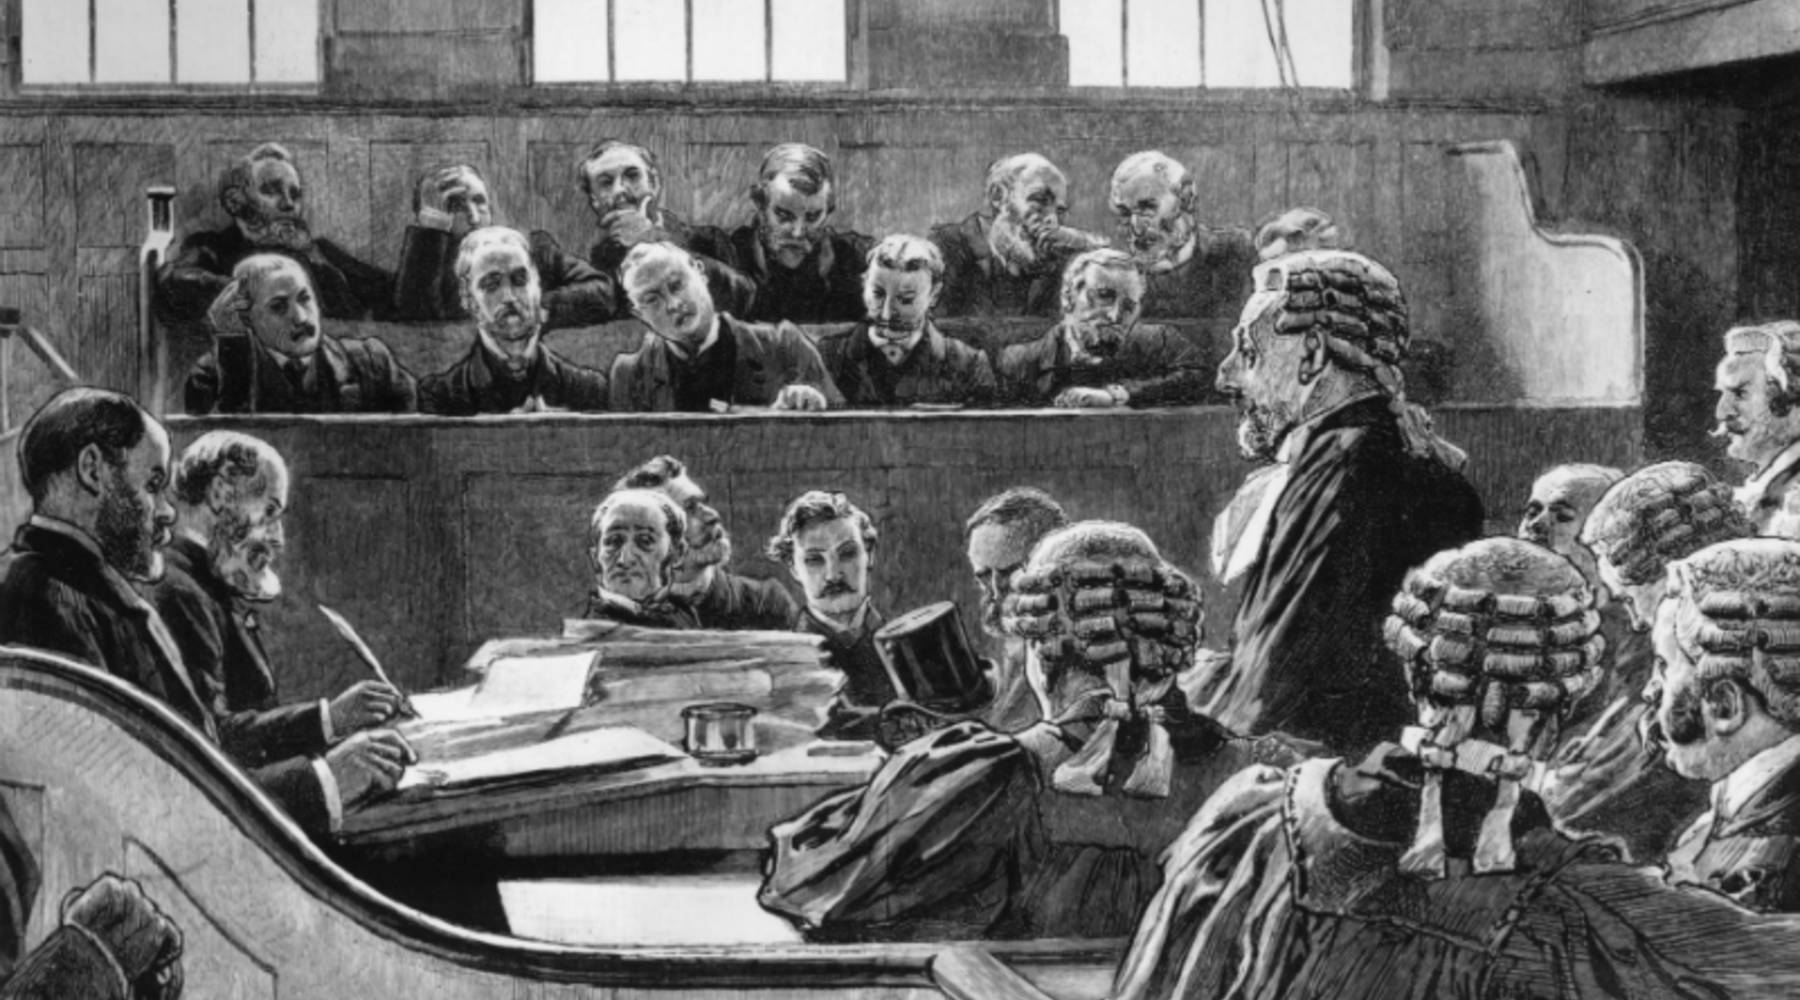 Век суда. Судья Англия 19 век. Суд присяжных Англия 12 век. Суд присяжных в 19 веке в Англии. Суд присяжных Англия 19 век.